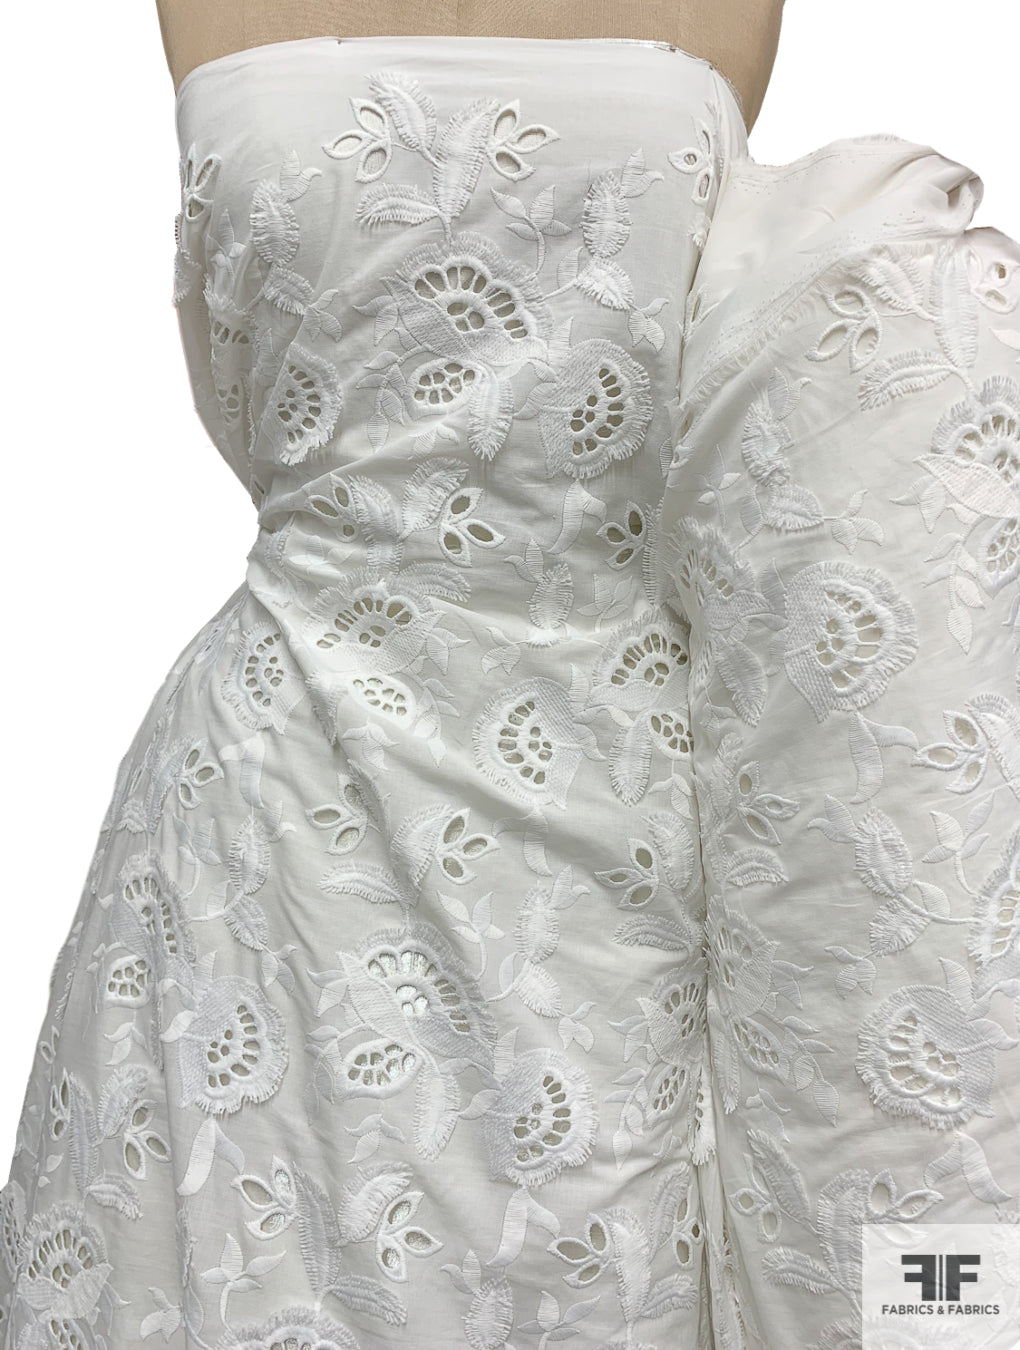 Lela Rose Floral Embroidered Cotton Voile Eyelet with Eyelash Detailing - White